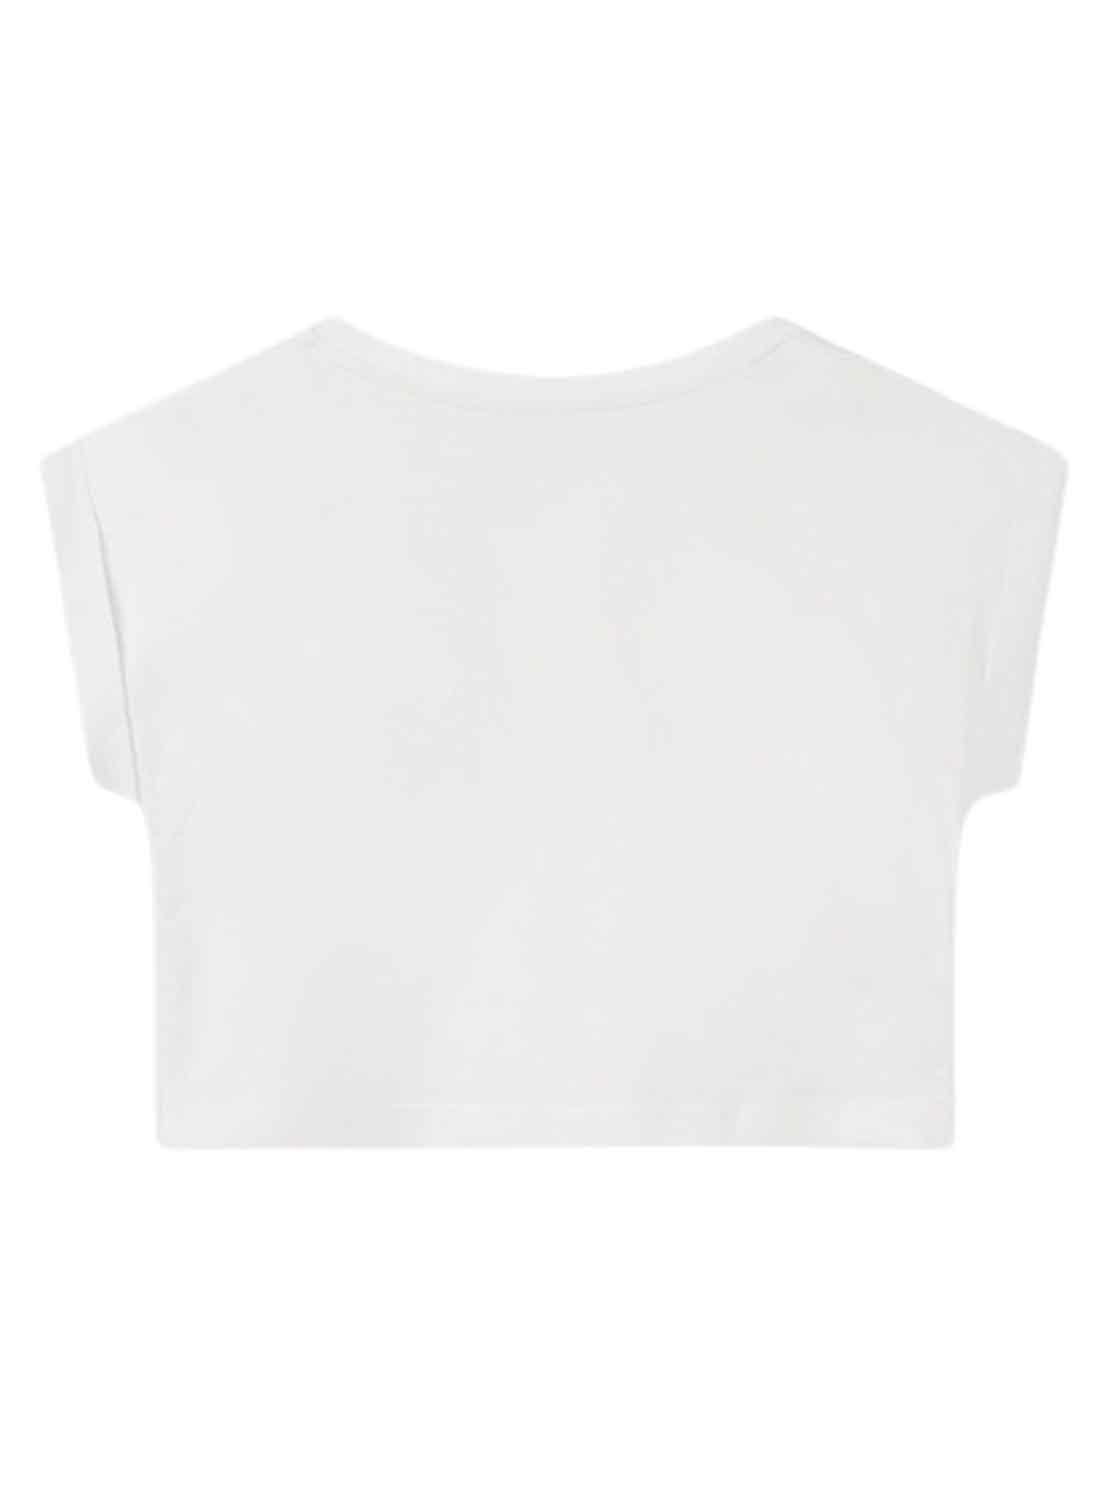 T-Shirt Mayoral Ricamo Bianco per Bambina